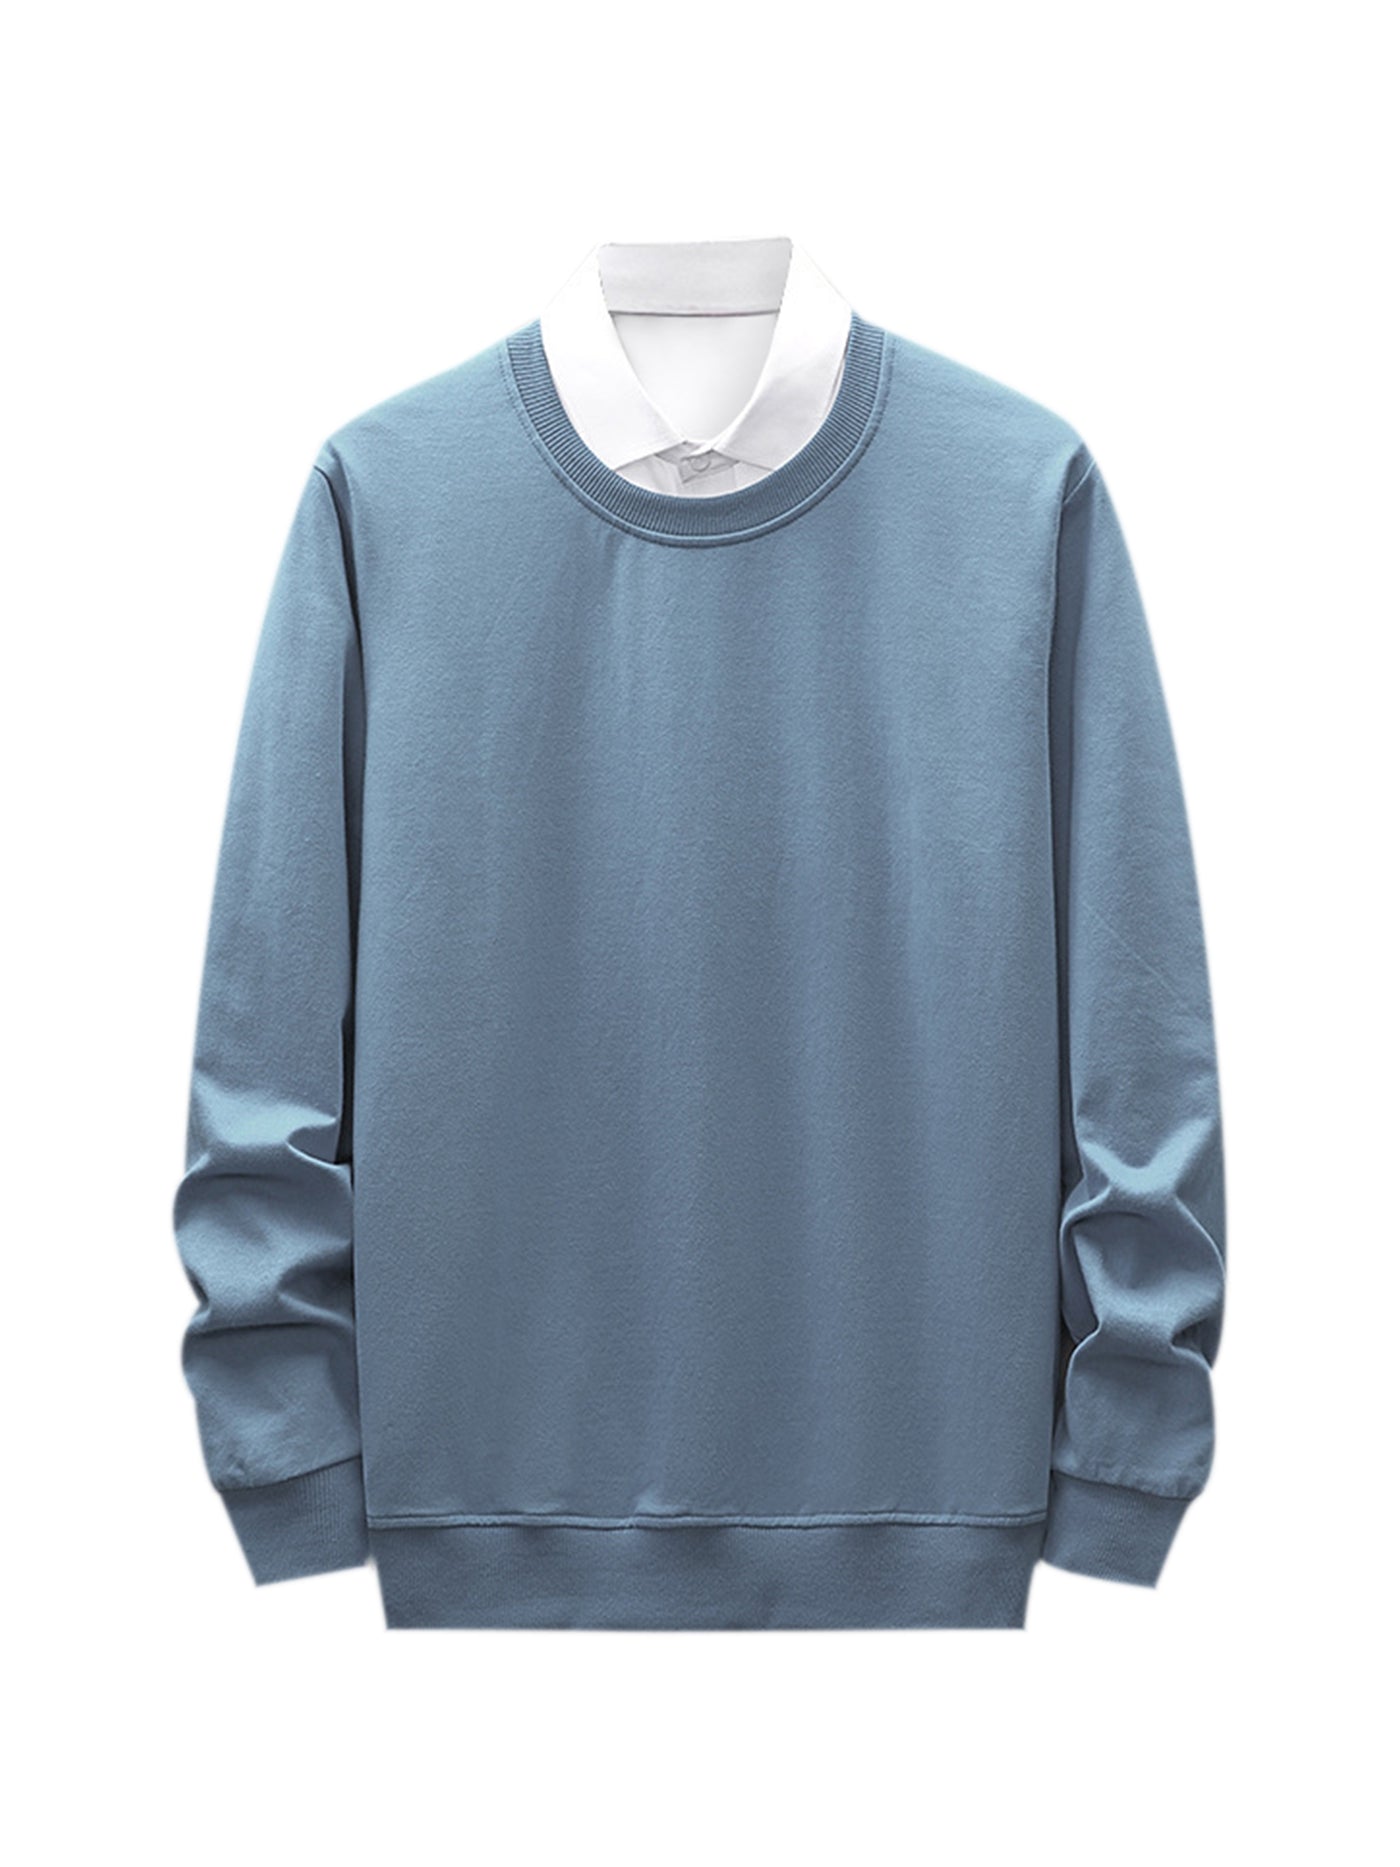 Bublédon Men's Classic Sweatshirt Crew Neck Regular Fit Long Sleeves Solid Basic Pullover